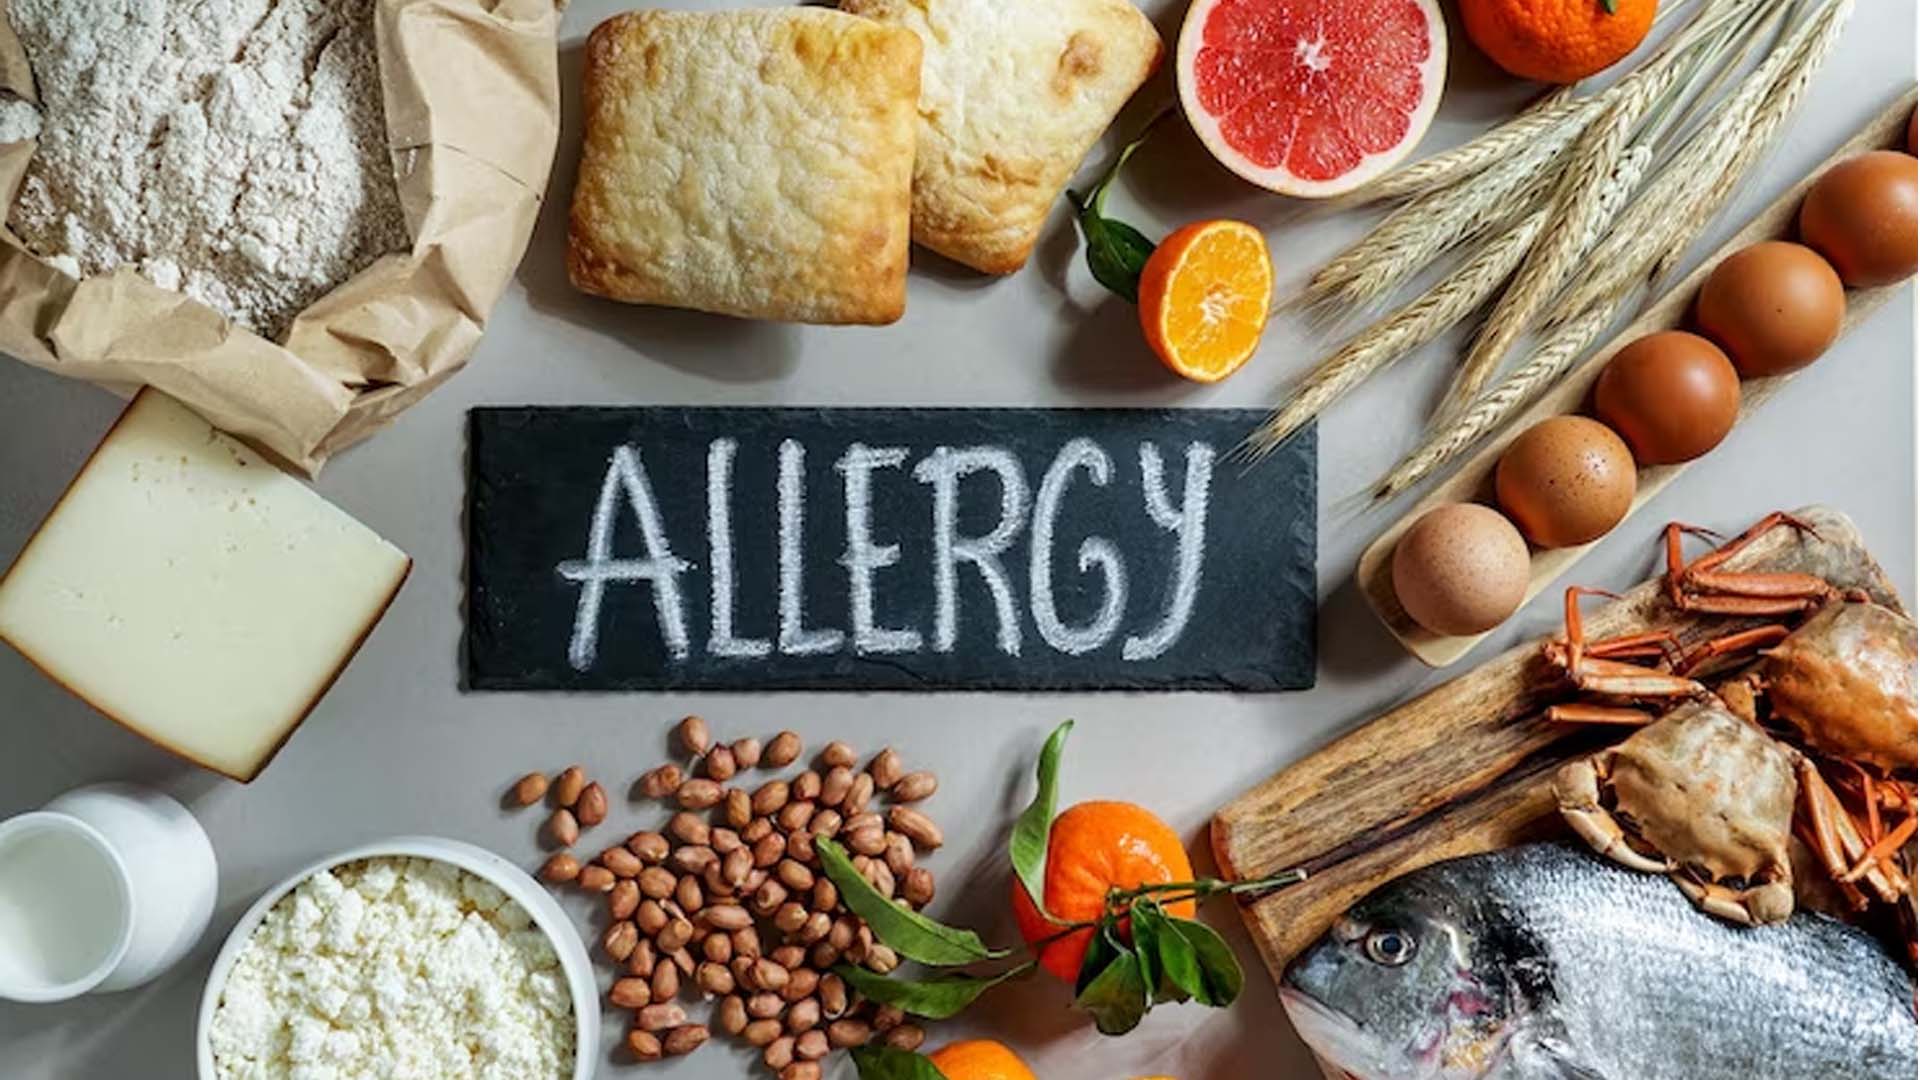 Allergic food